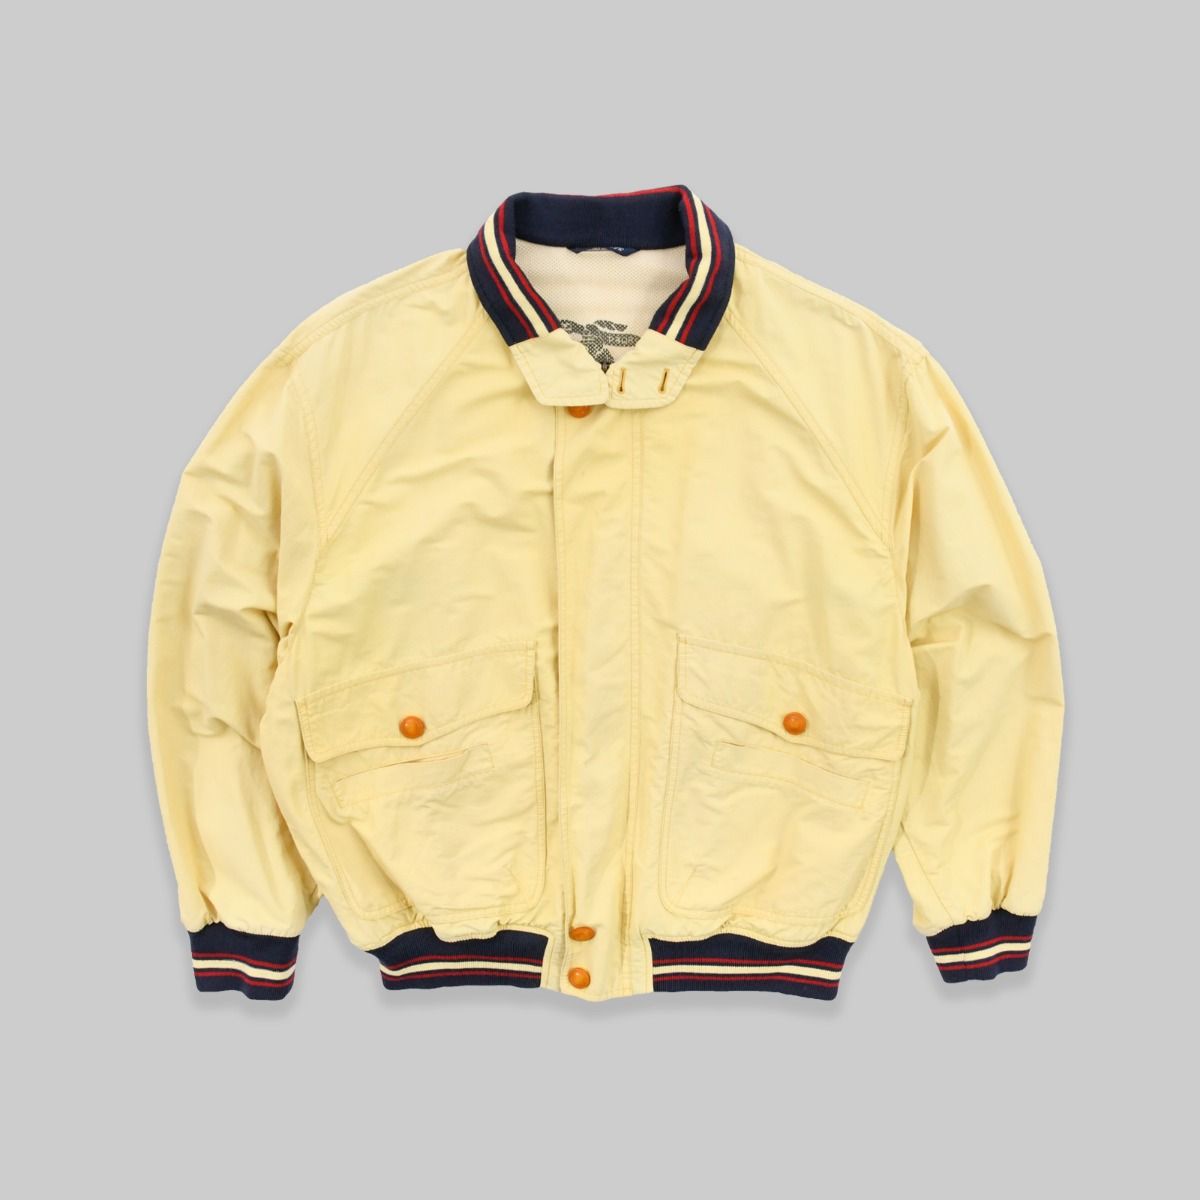 Burberry 1980s Yellow Jacket